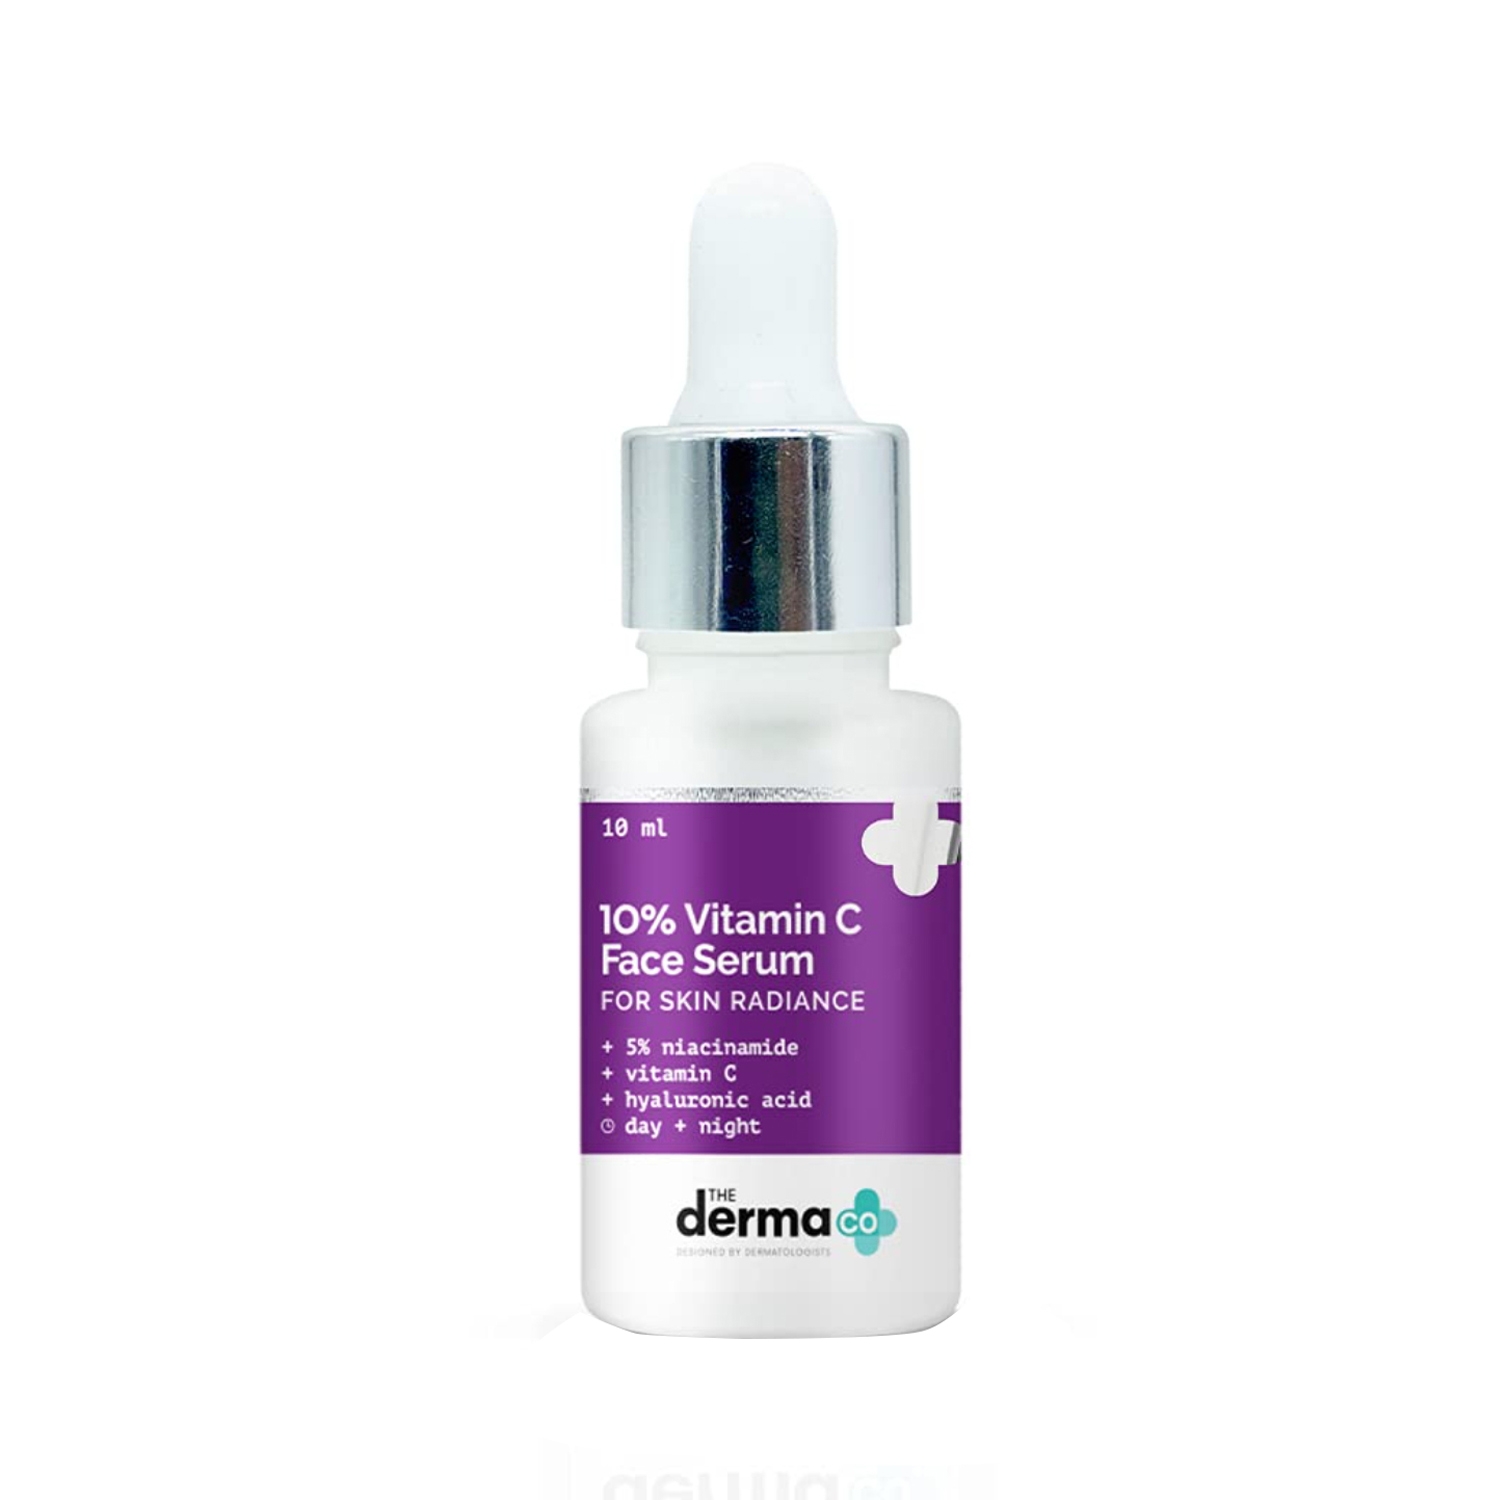 The Derma Co | The Derma Co 10% Vitamin C Face Serum (10ml)